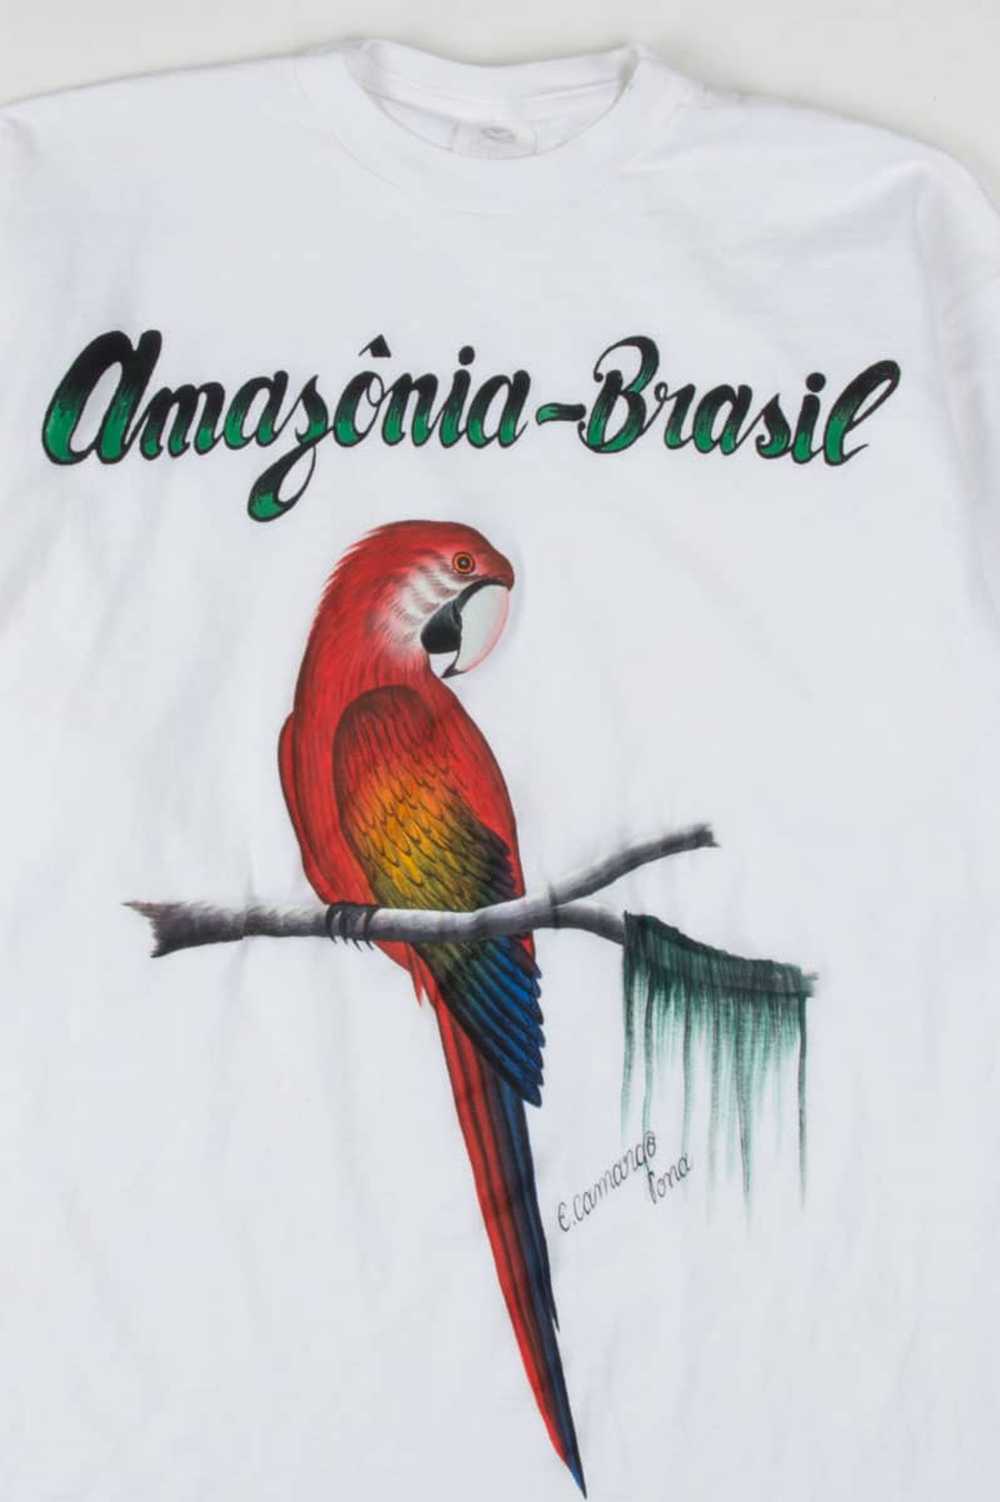 Amazonia-Brasil Painted Parrot Souvenir T-Shirt - image 1